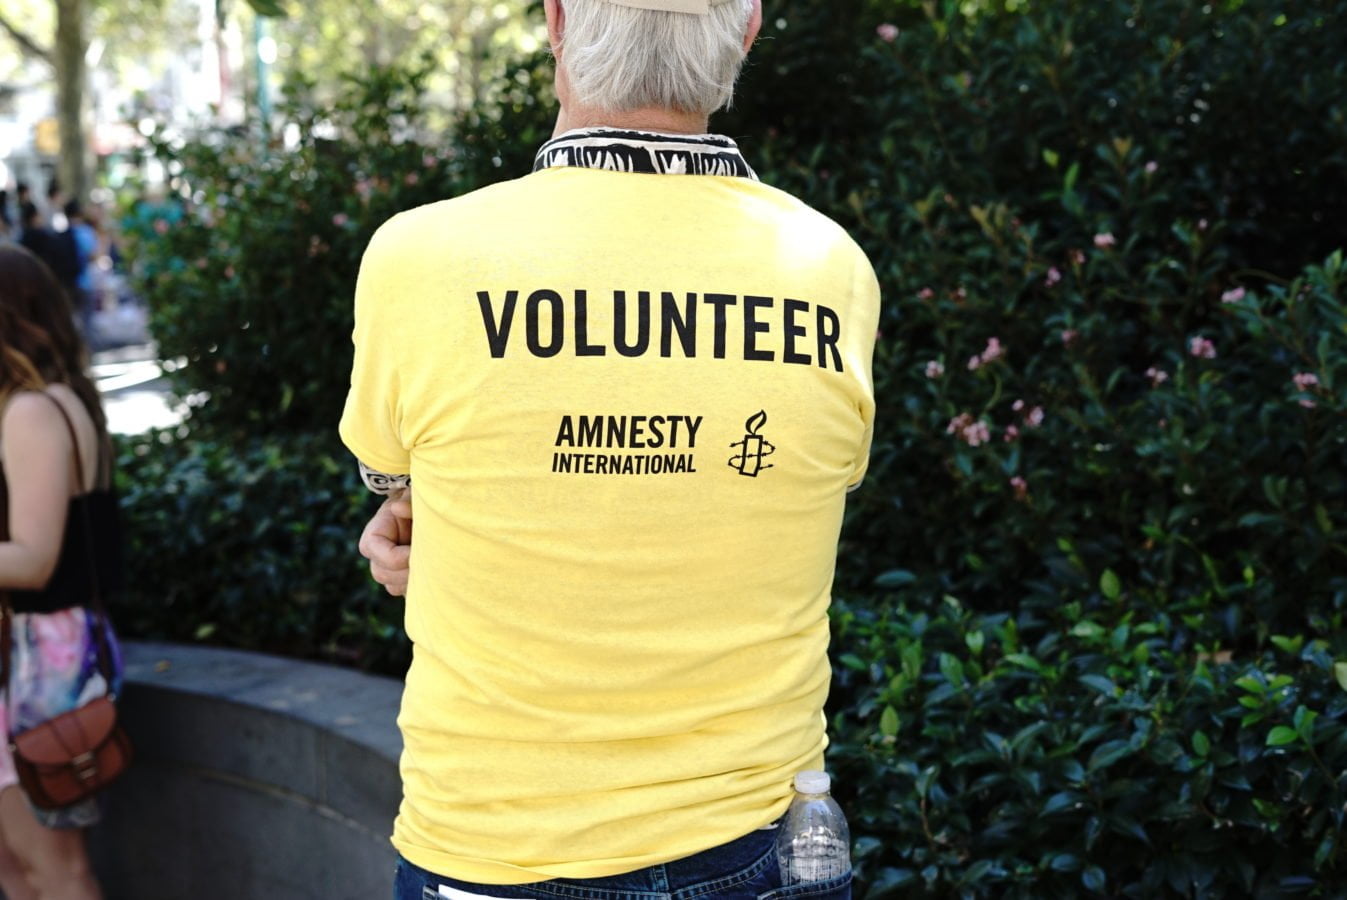 Volunteer wearing a yellow amnesty shirt